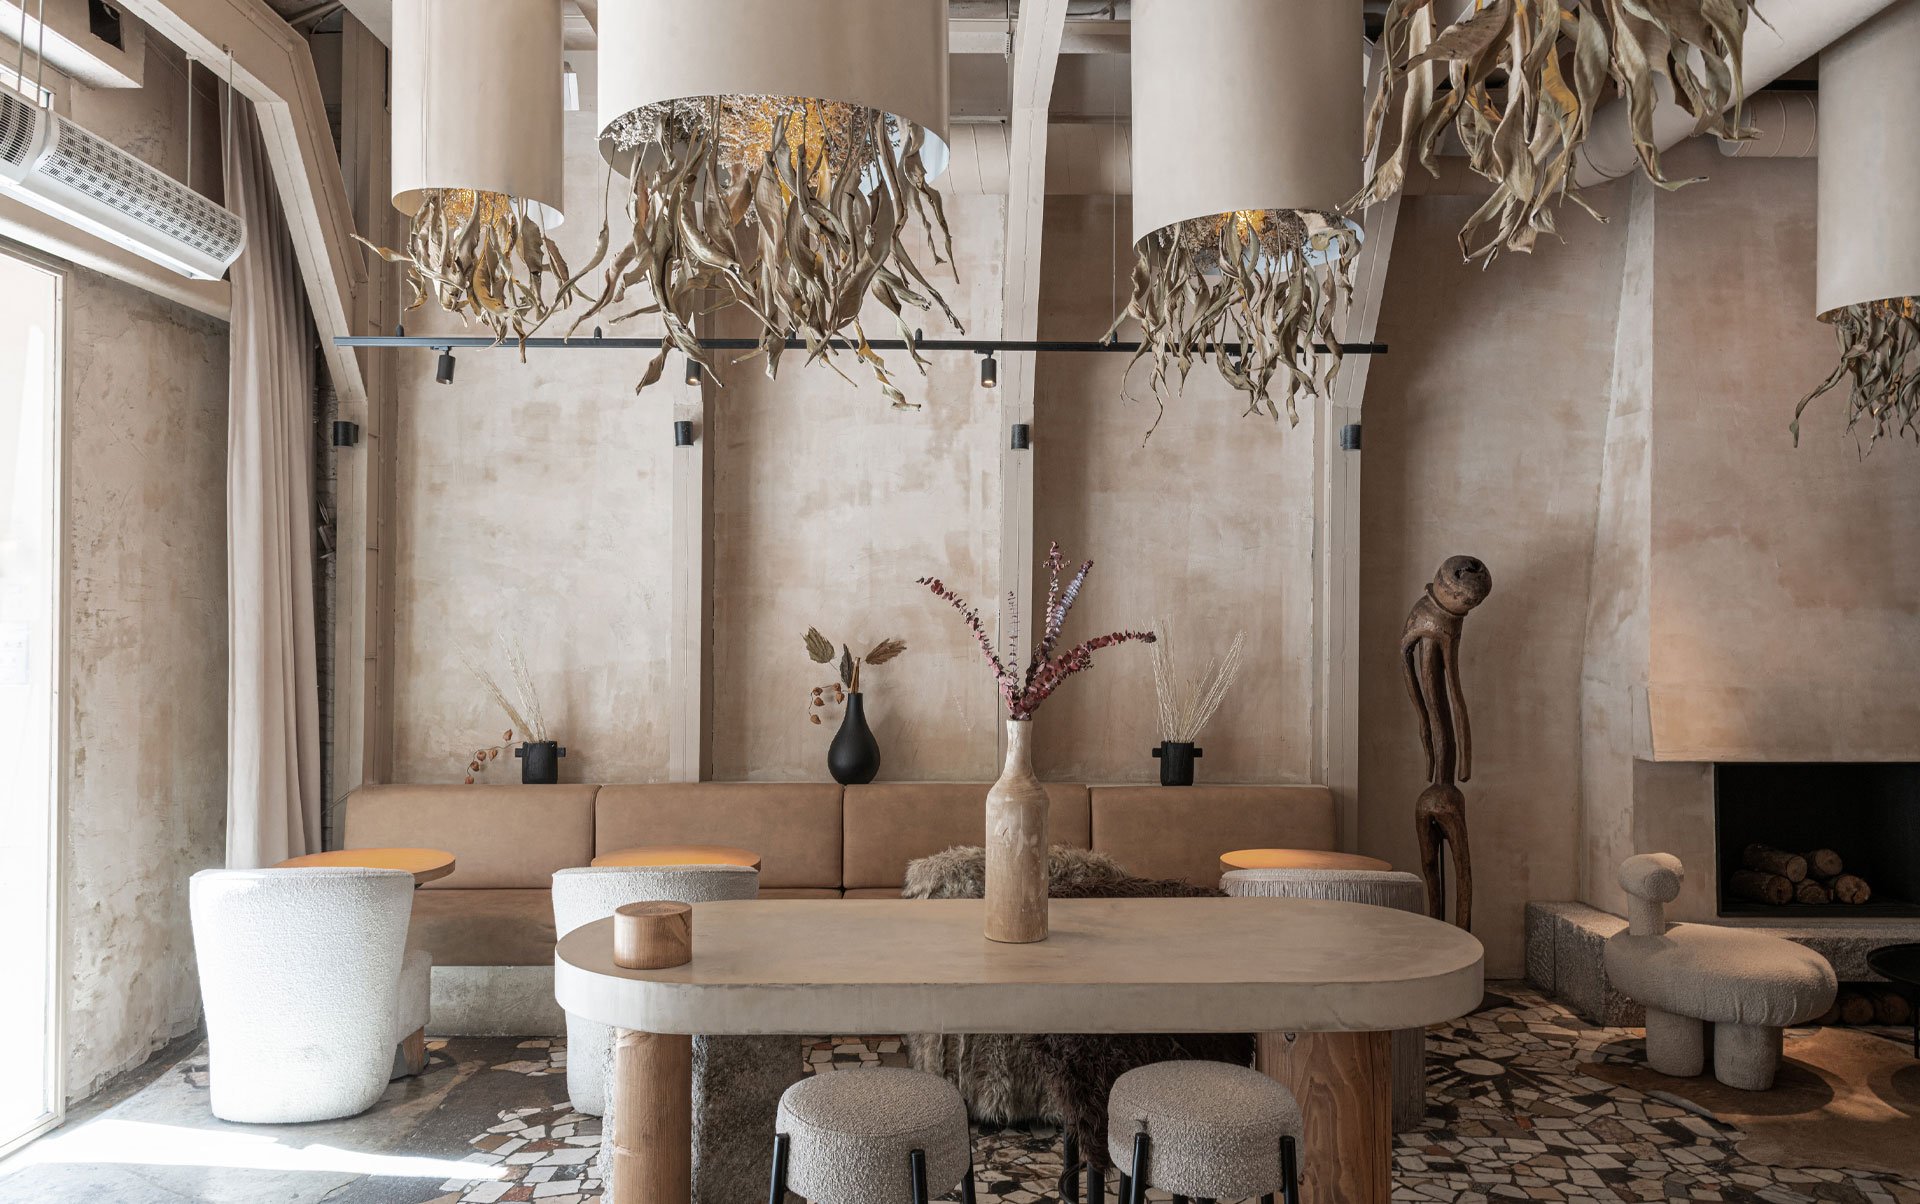 Ritual - Restaurant - Architecture and Interior design - Origen studio